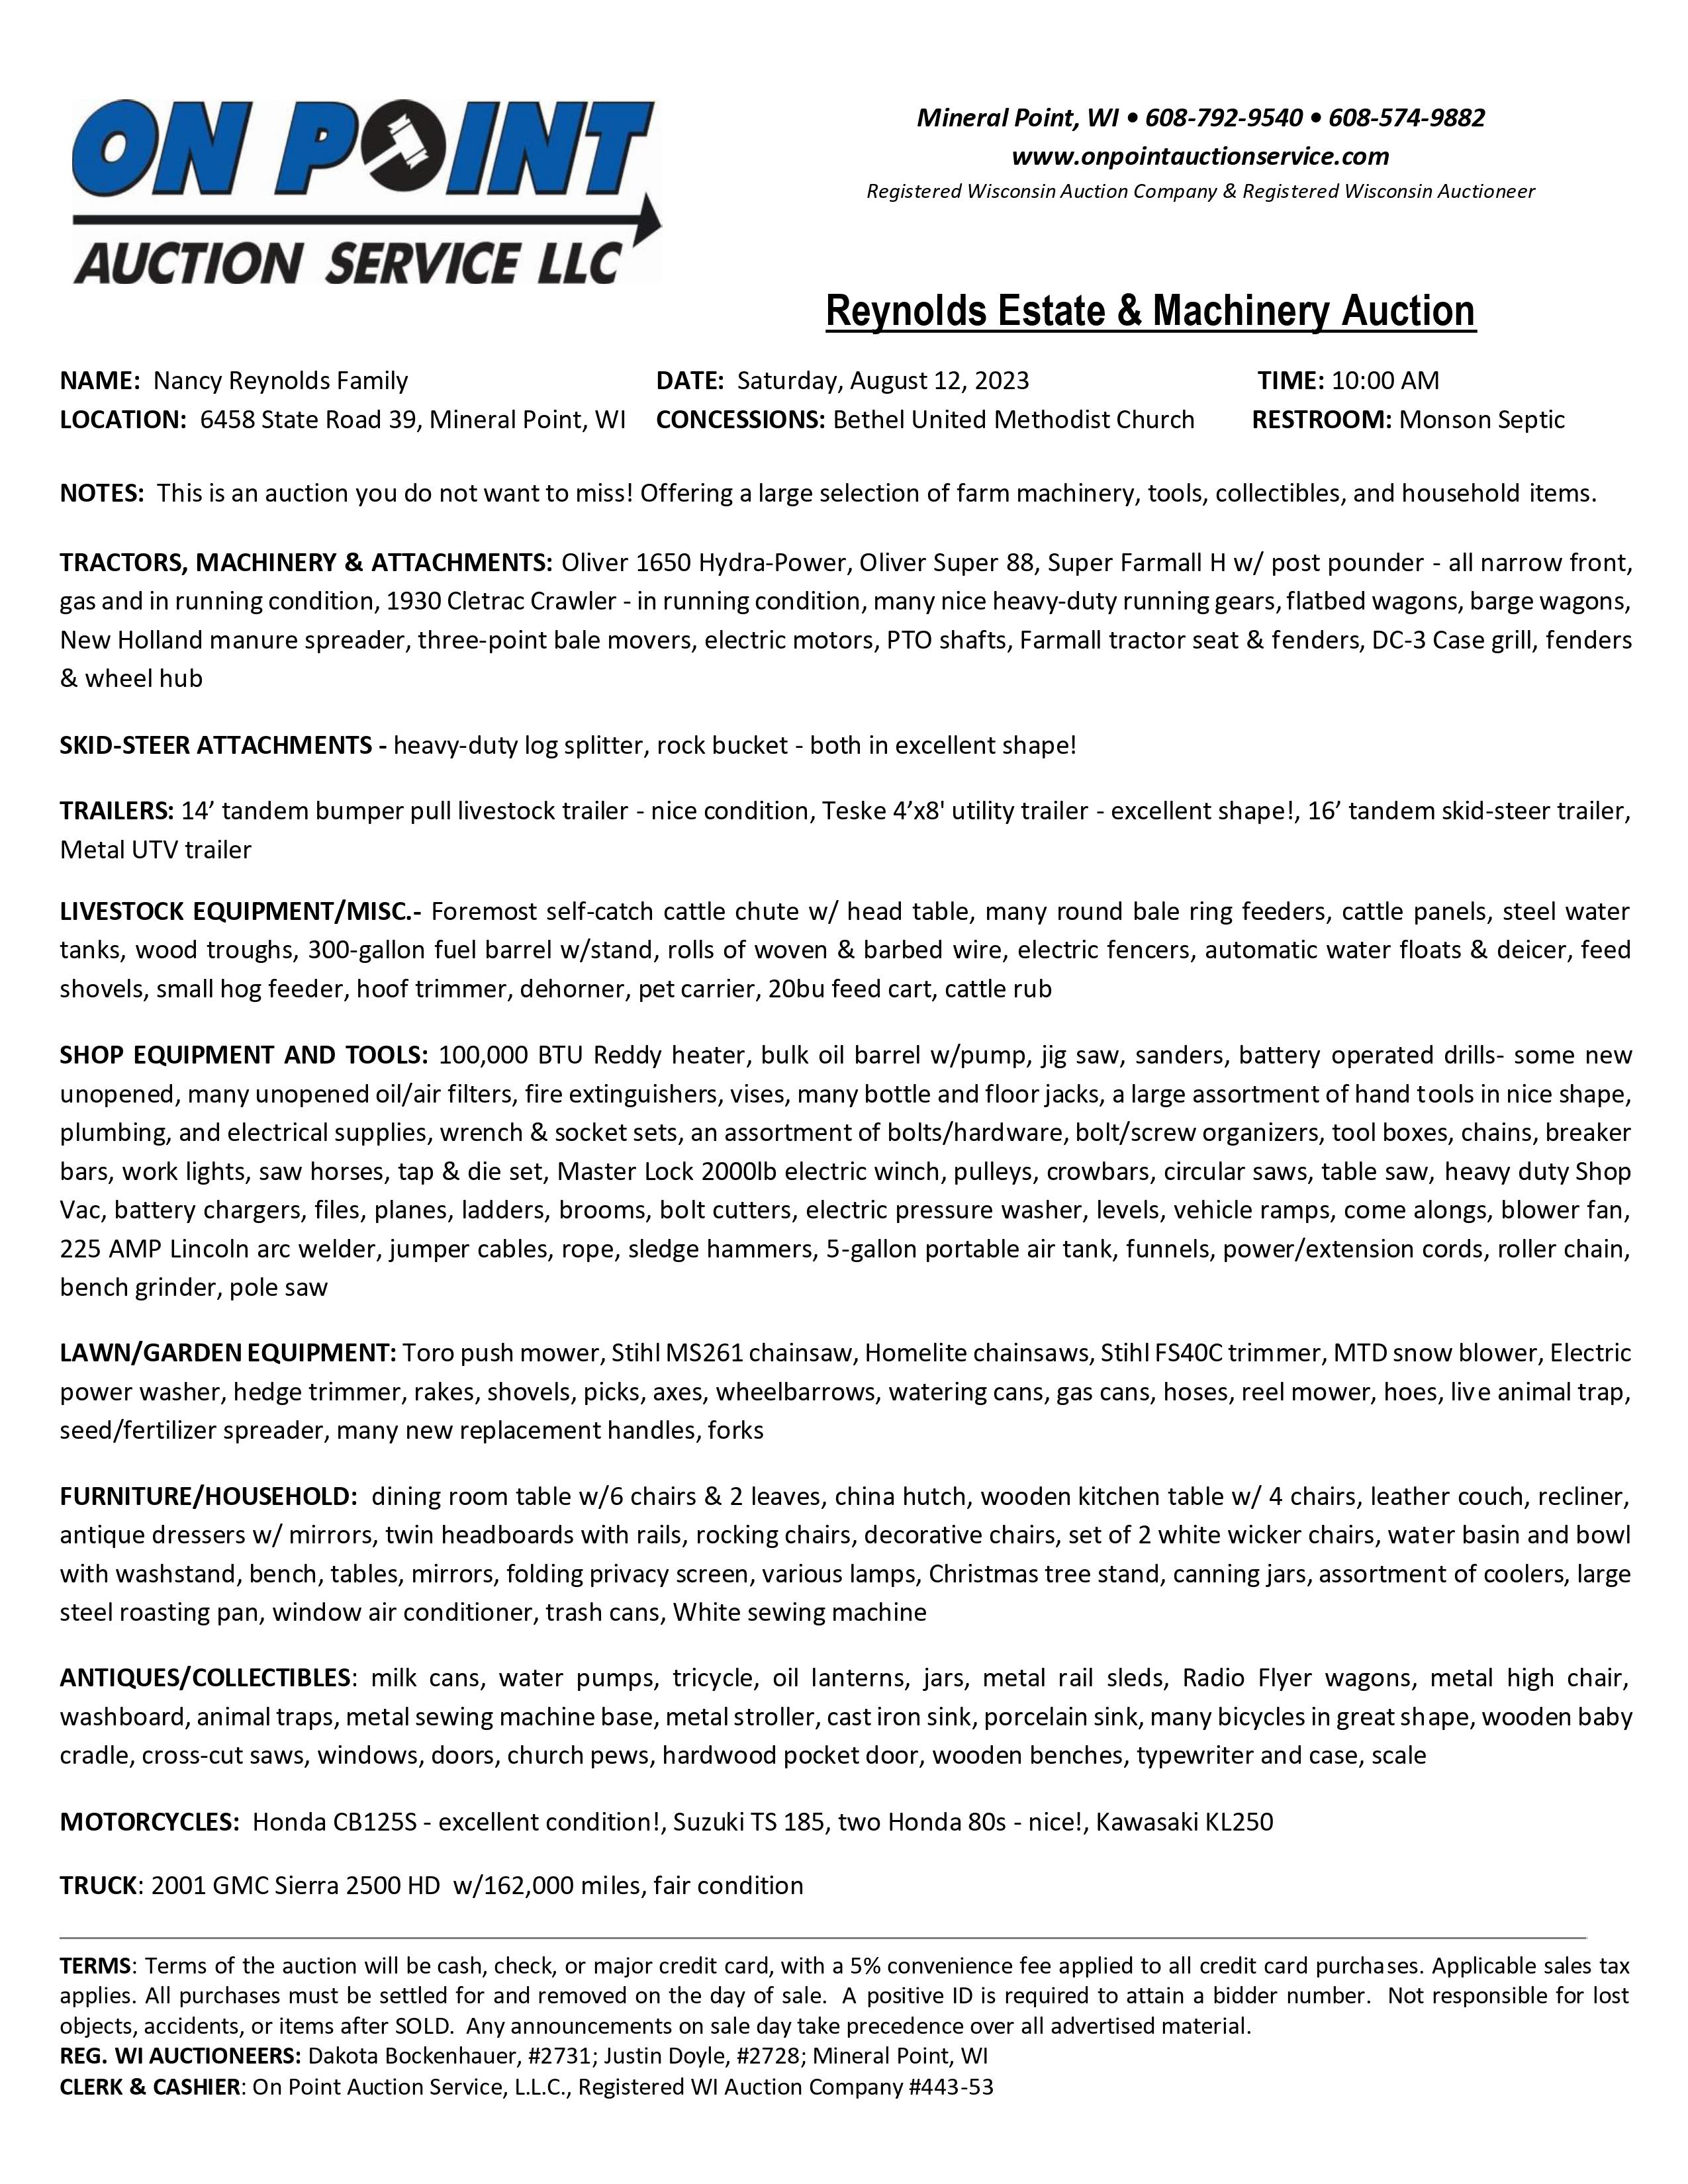 Reynolds Estate & Machinery Auction Sale Bill